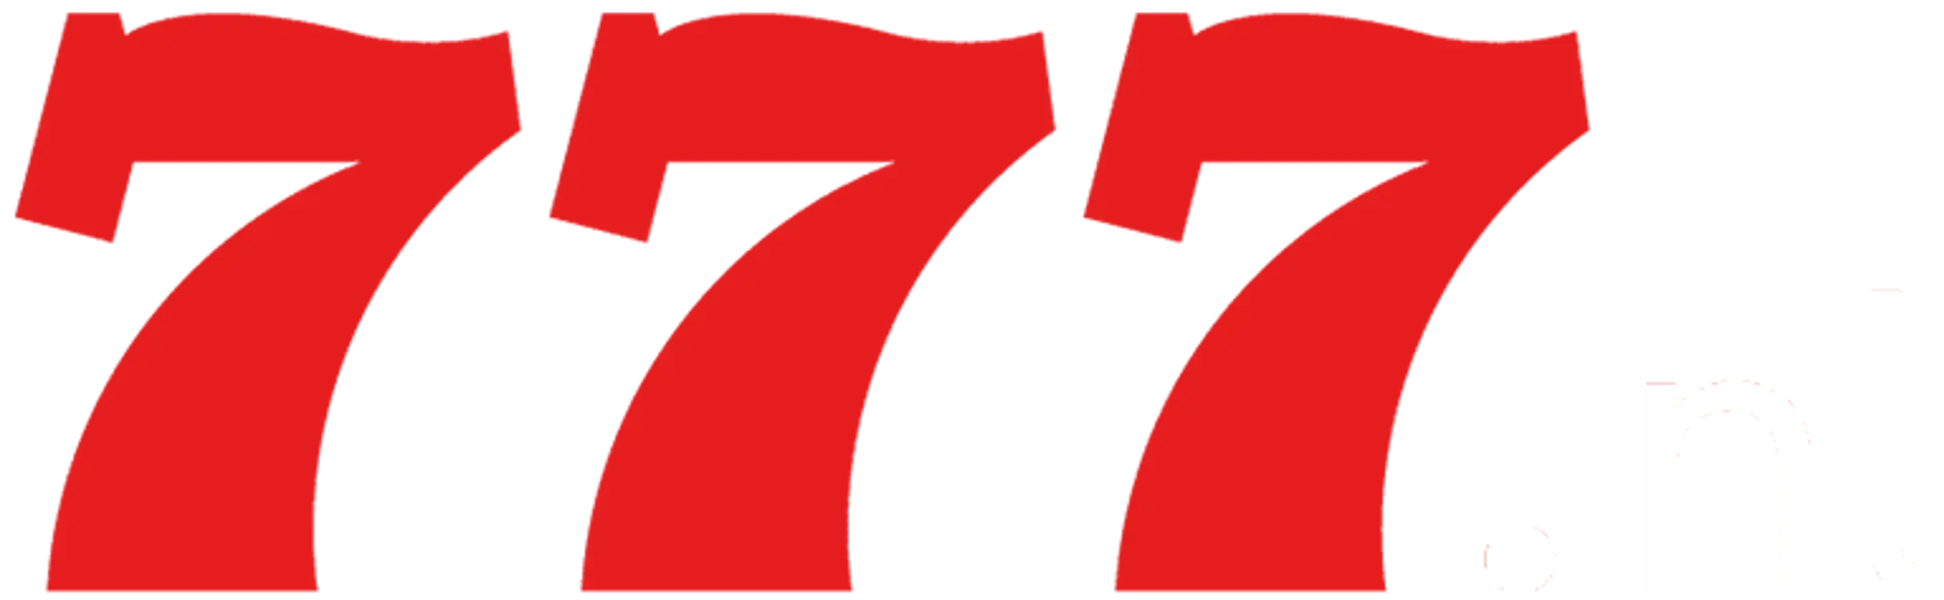 casino777 logo